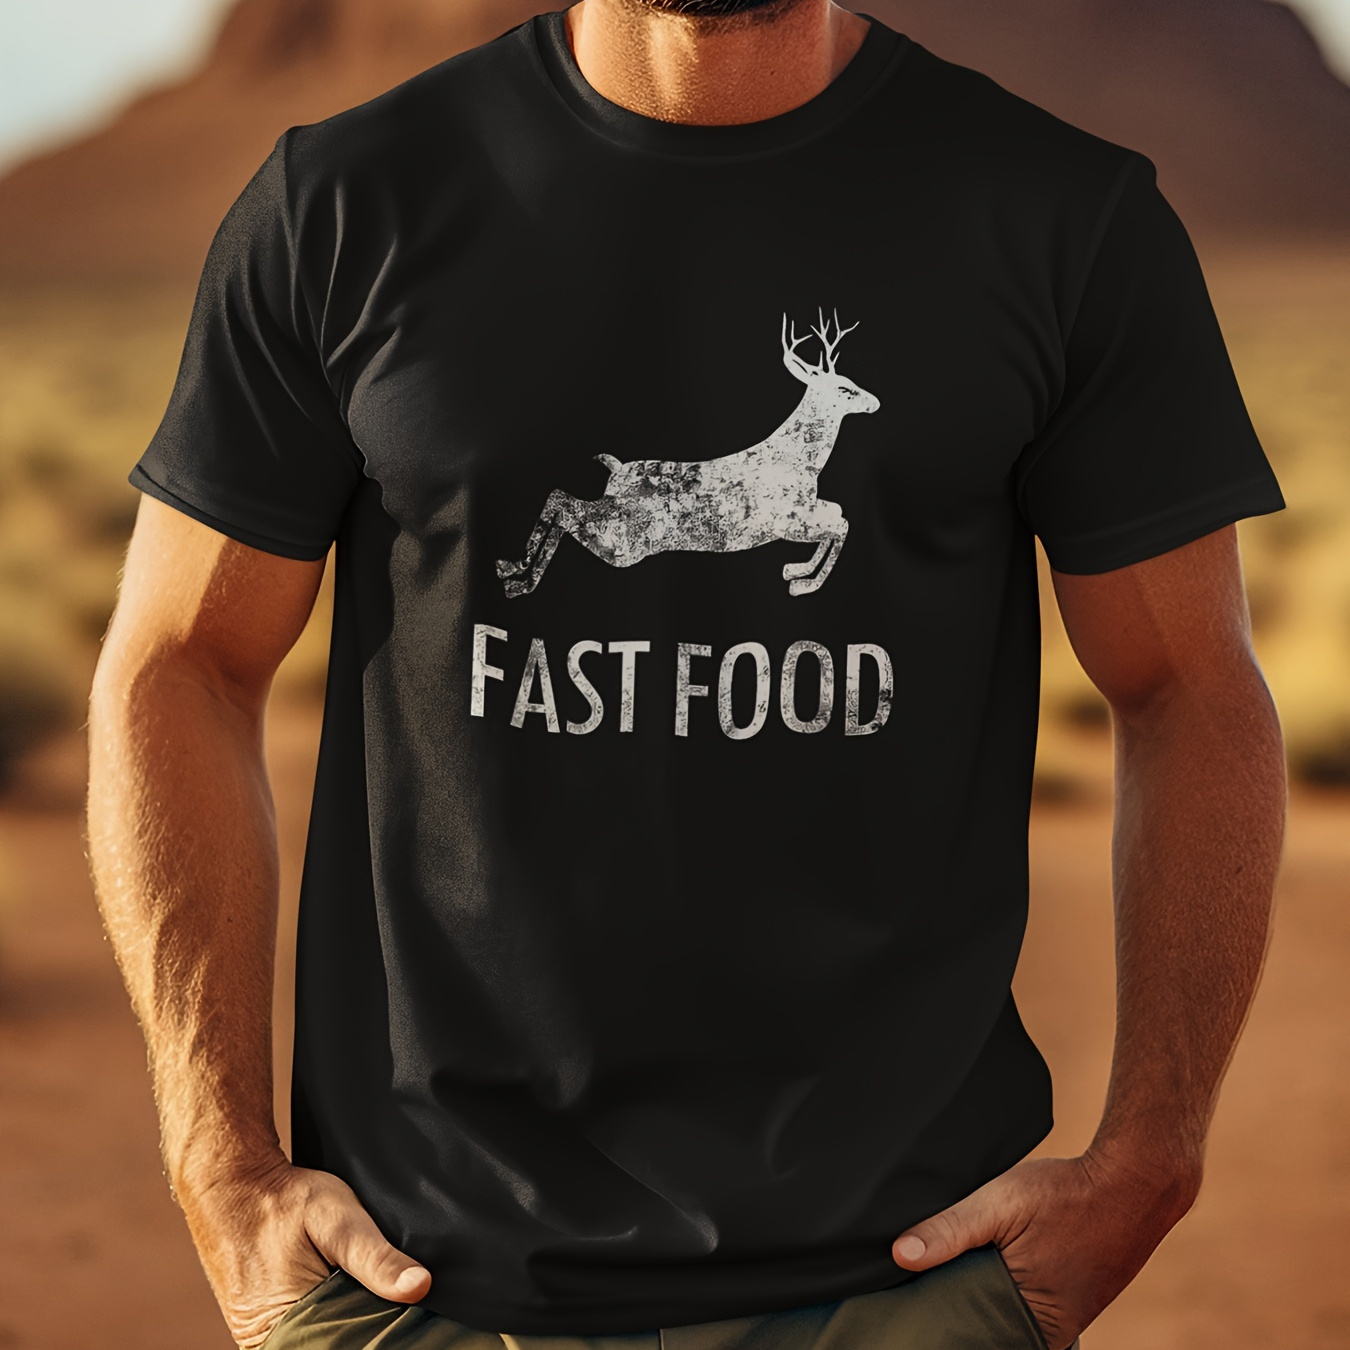 

Funny Joke Hunting Shirt - Men's Front Printed Short Sleeve T-shirt Top - Fast Food Deer - Gifts For Hunters